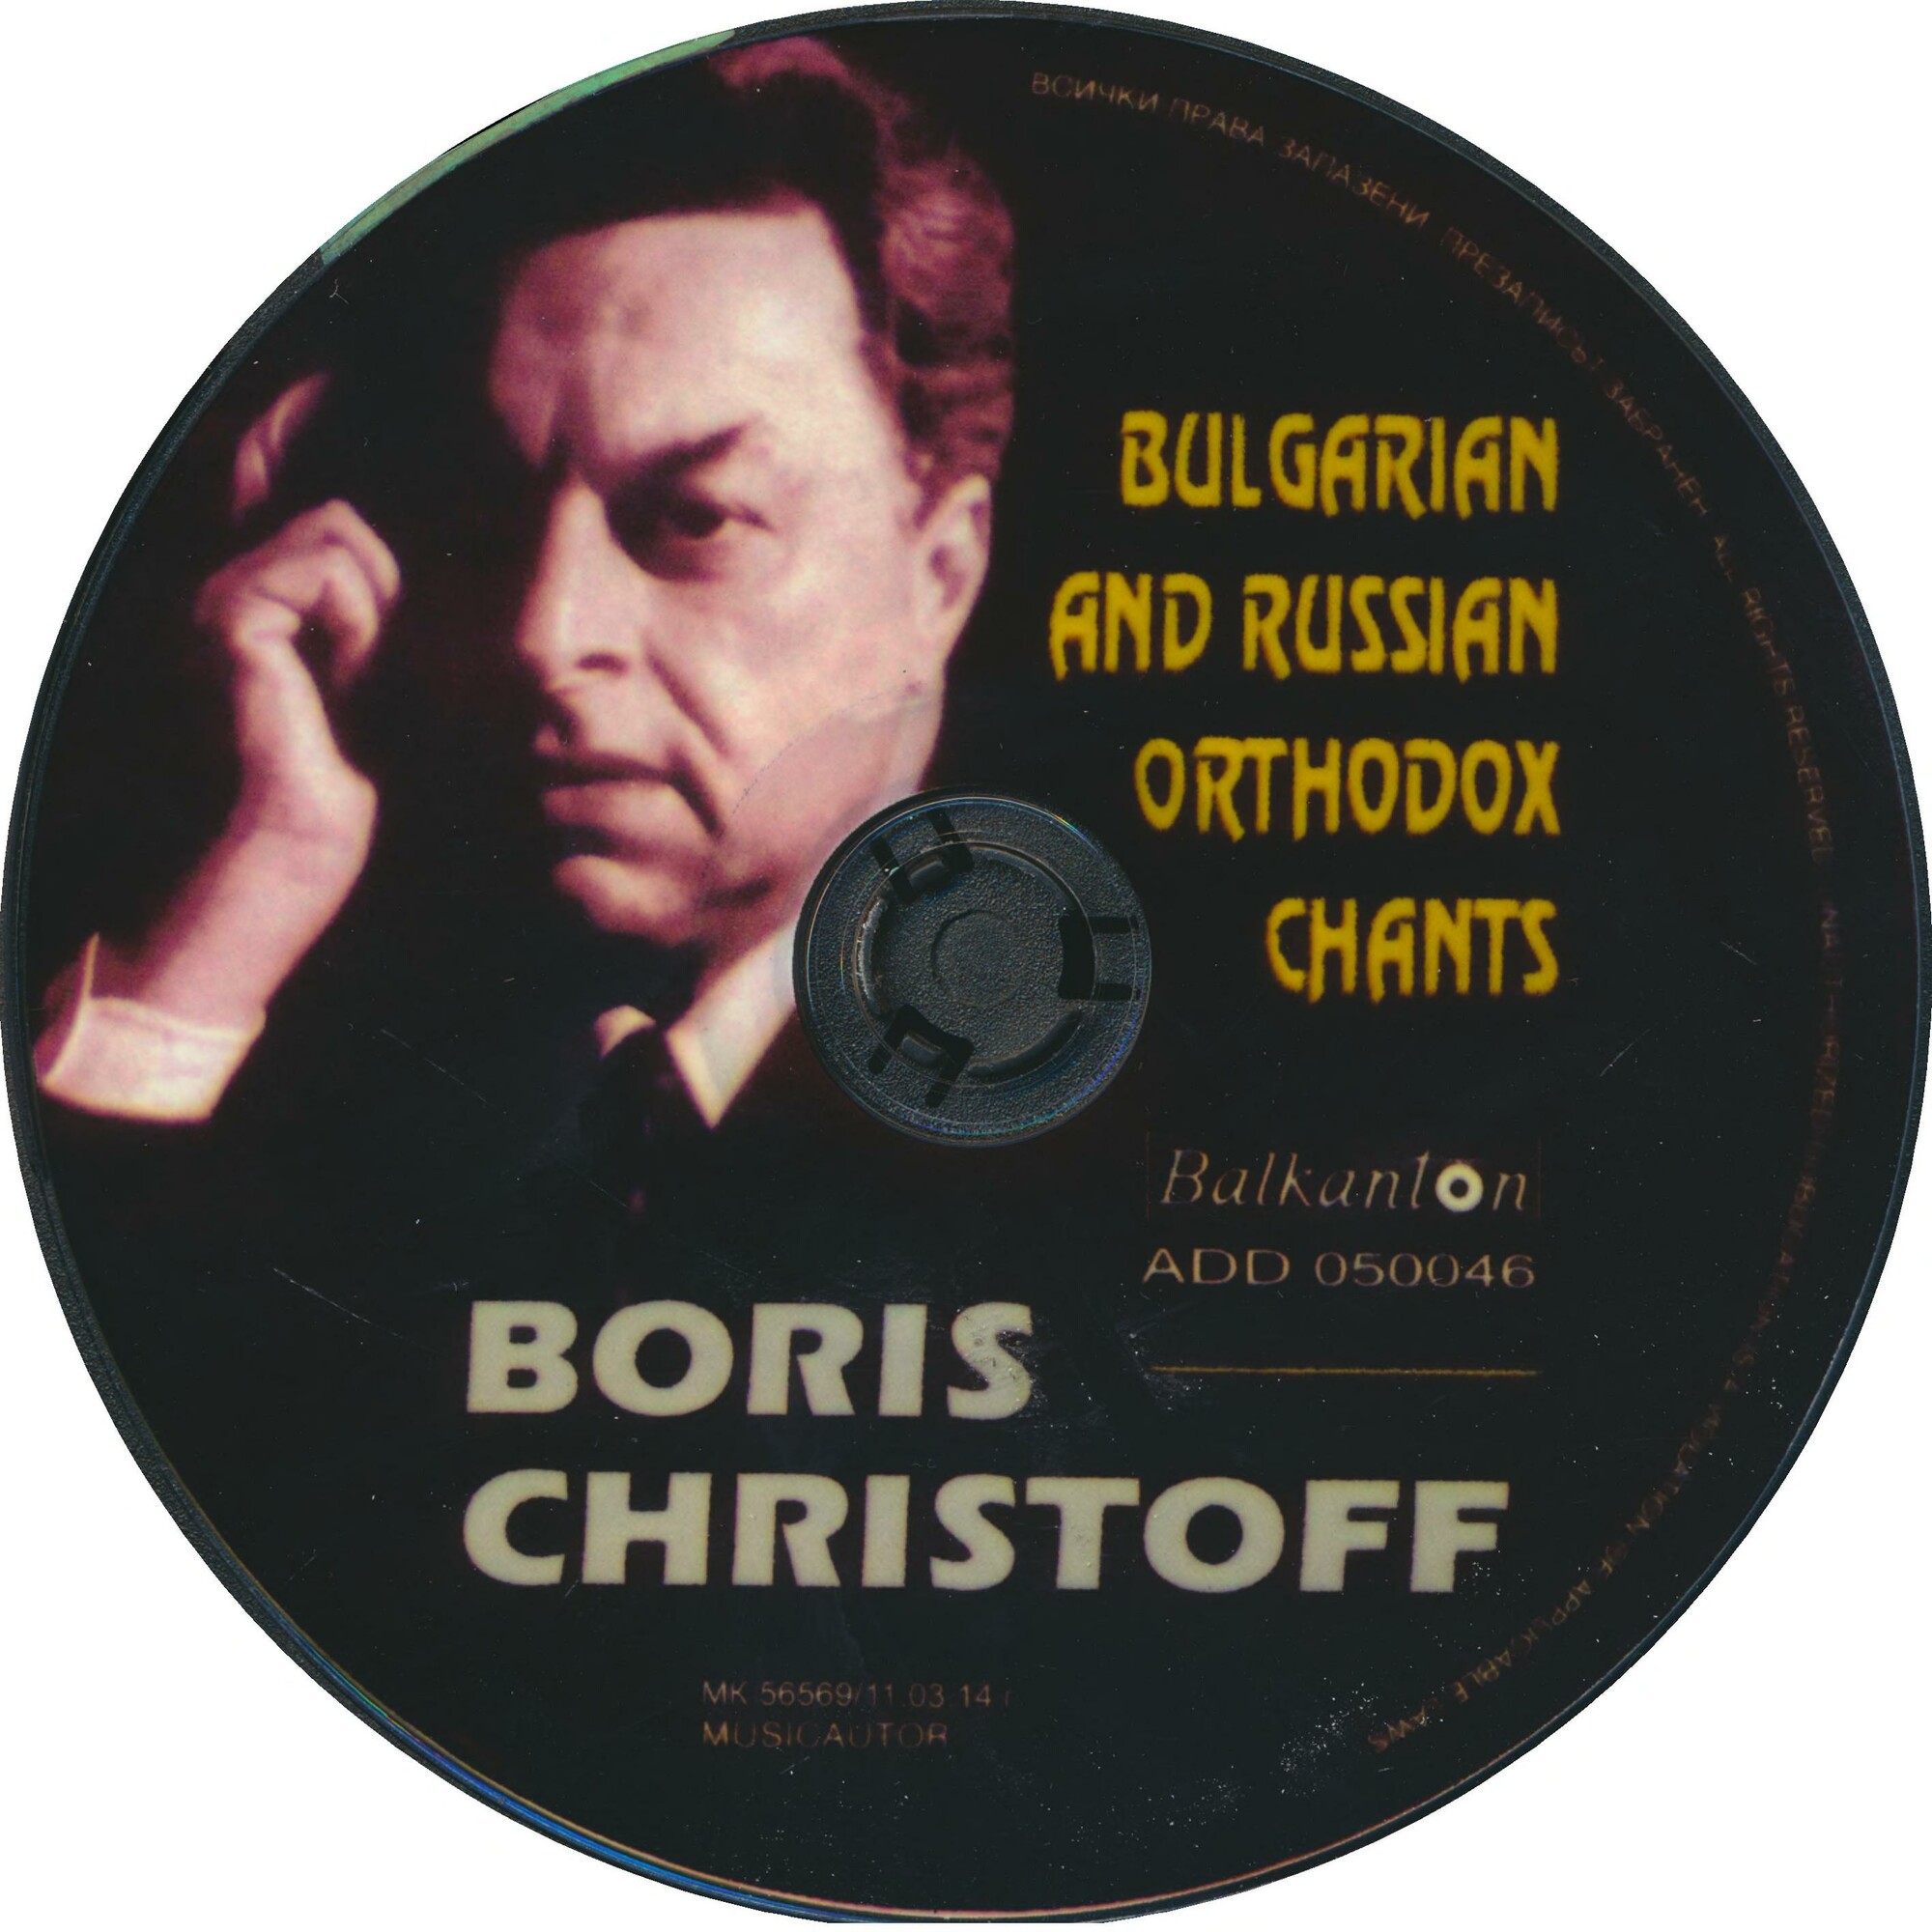 Boris Christoff. Bulgarian and Russian Orthodox Chants